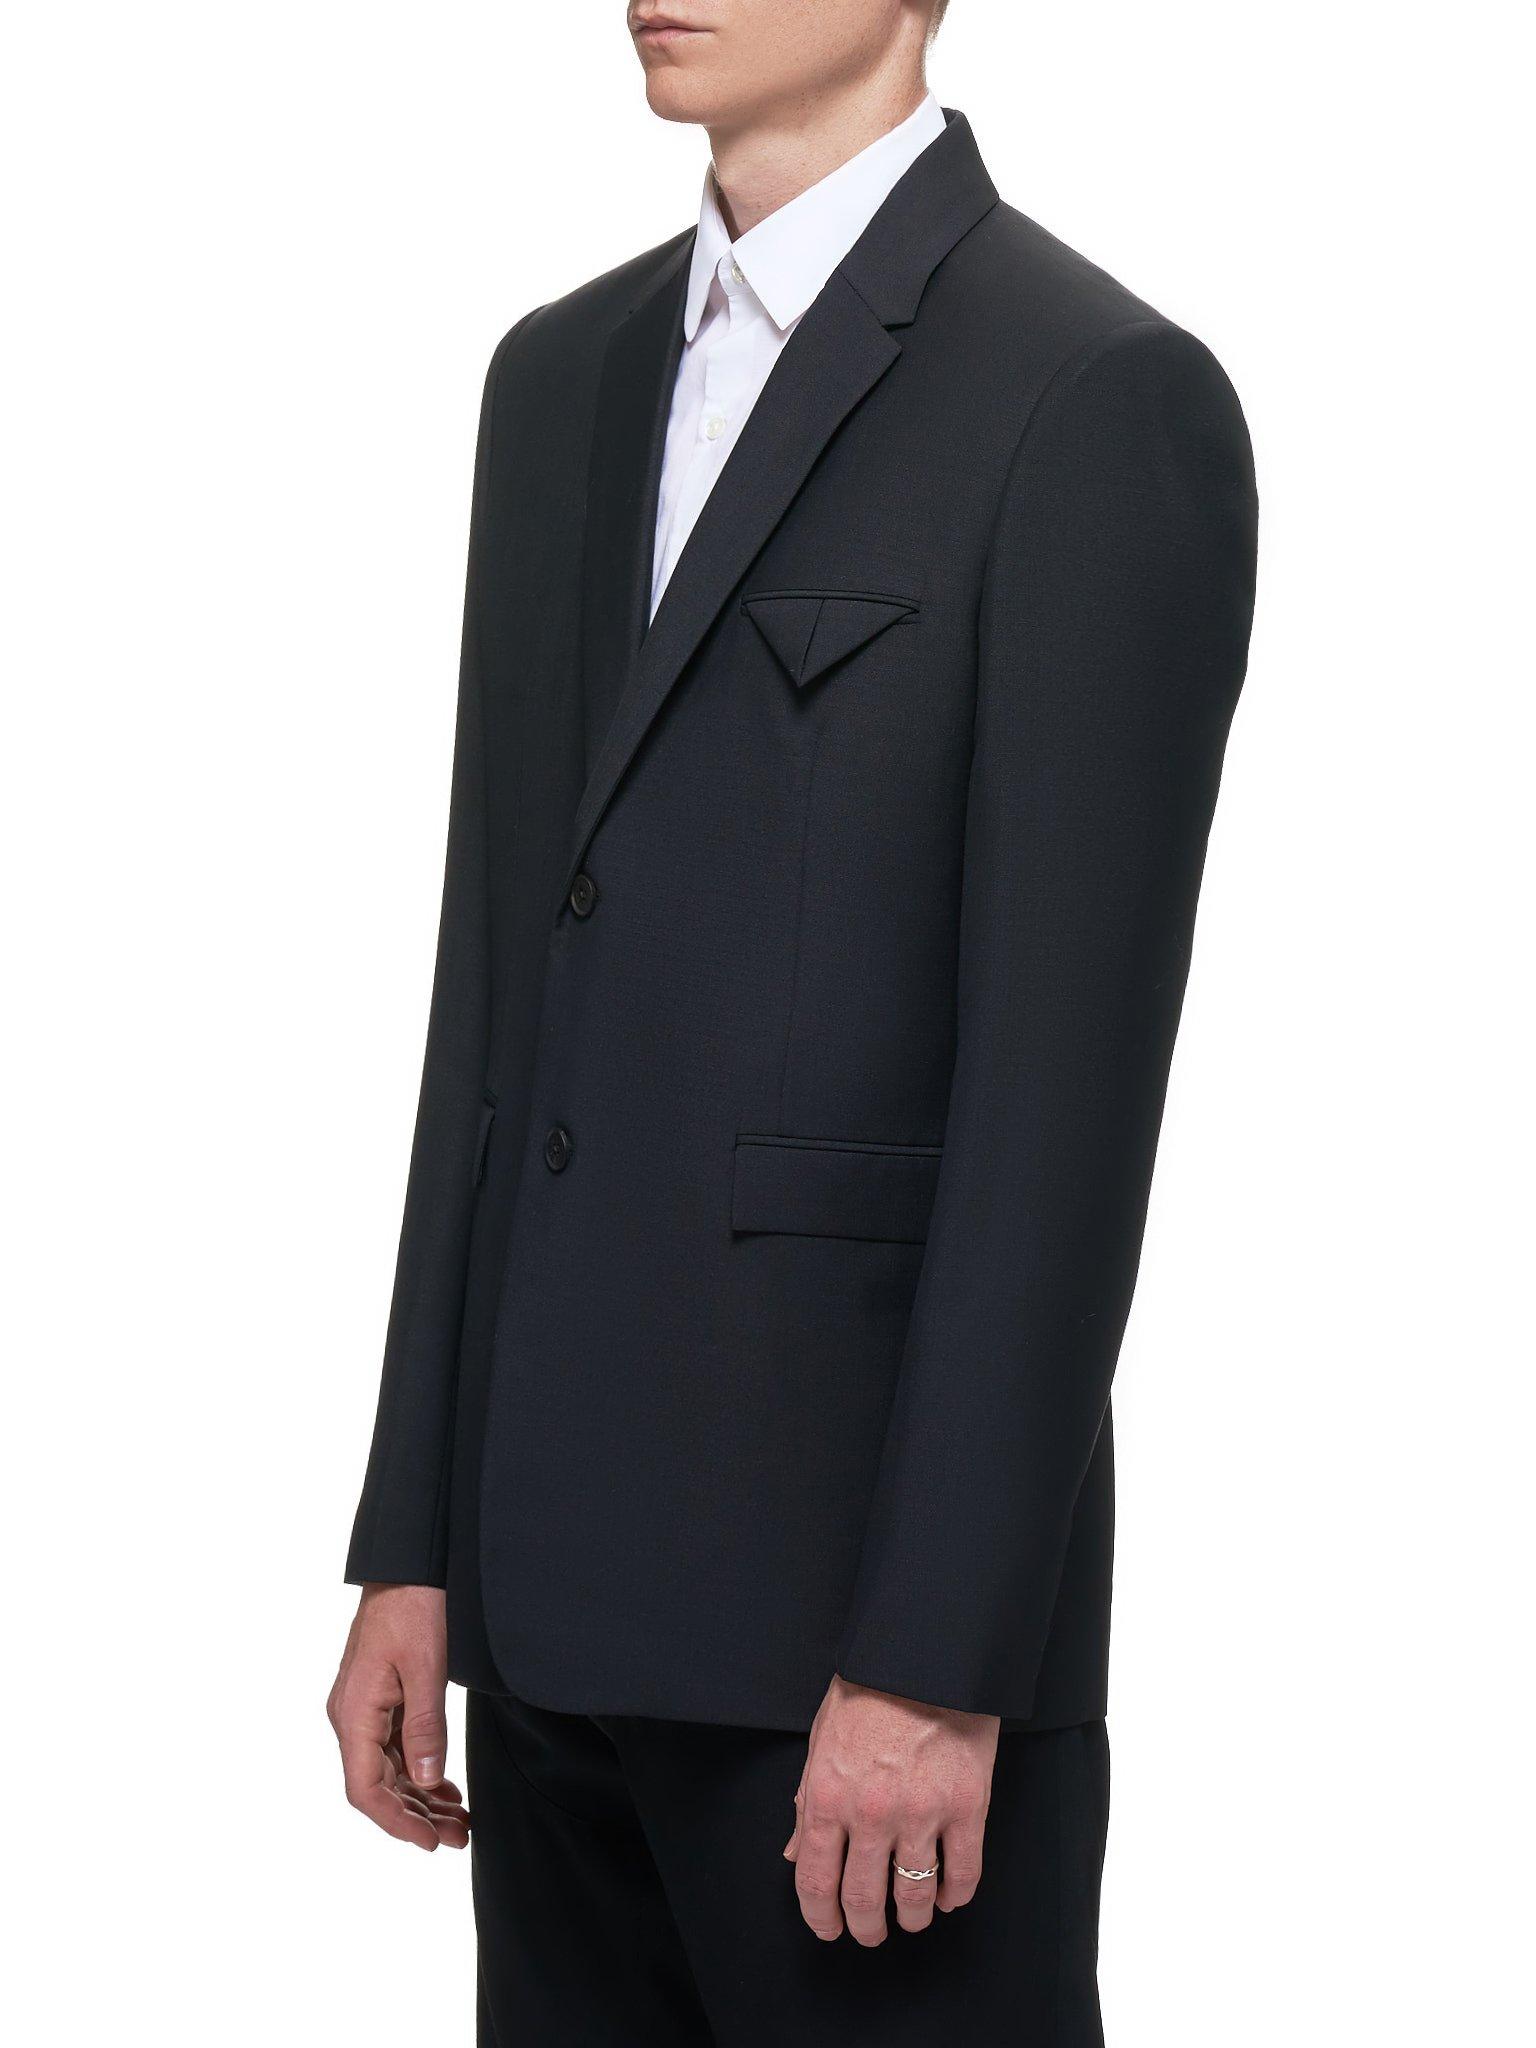 Bottega Veneta Wool Jacket in Black for Men - Lyst